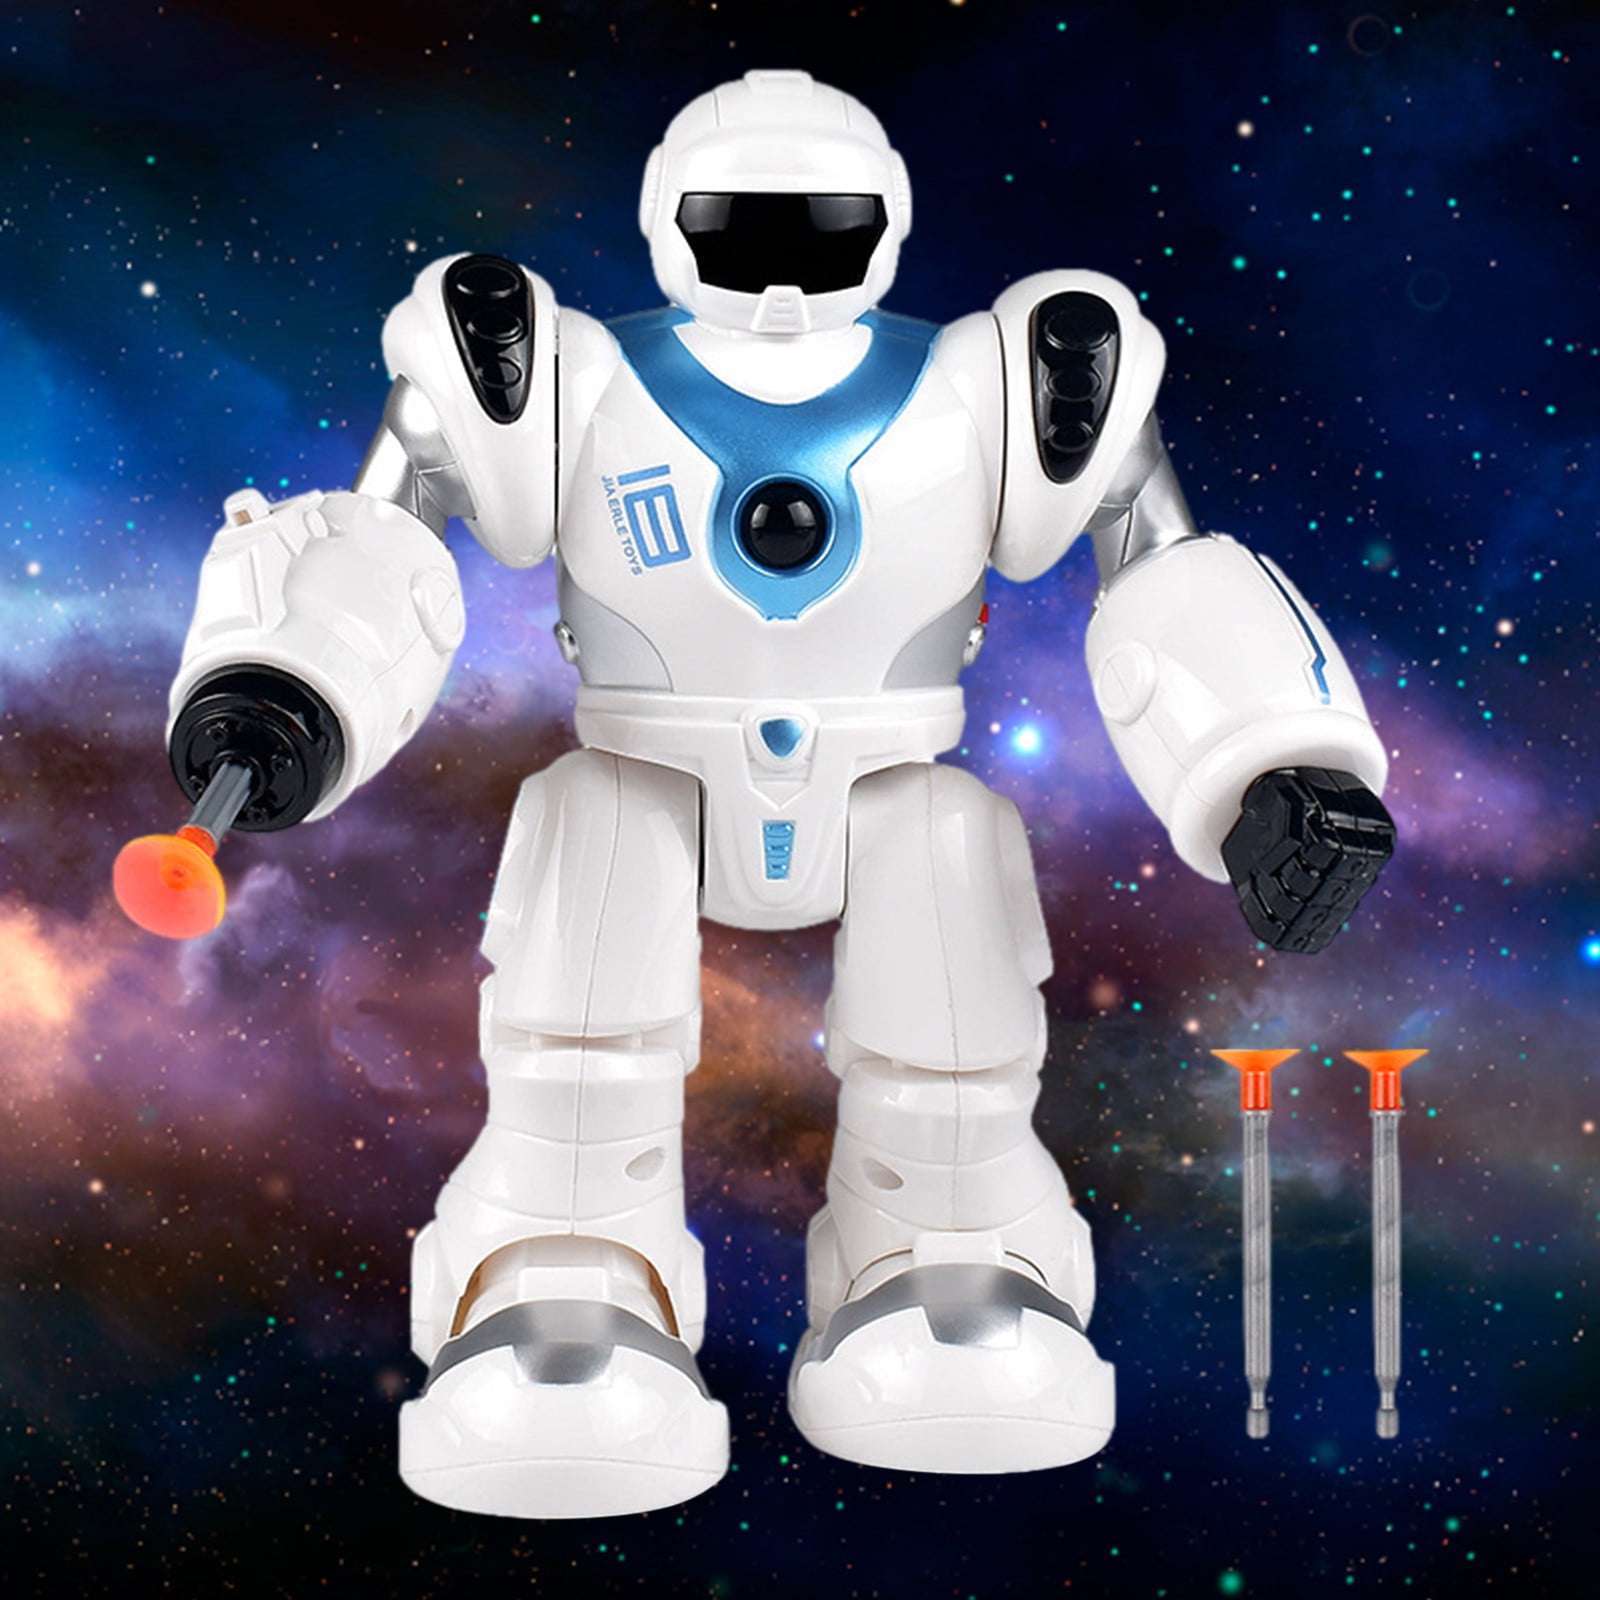 Buy Lexibook POWERMAN Master Stem Robot with Games